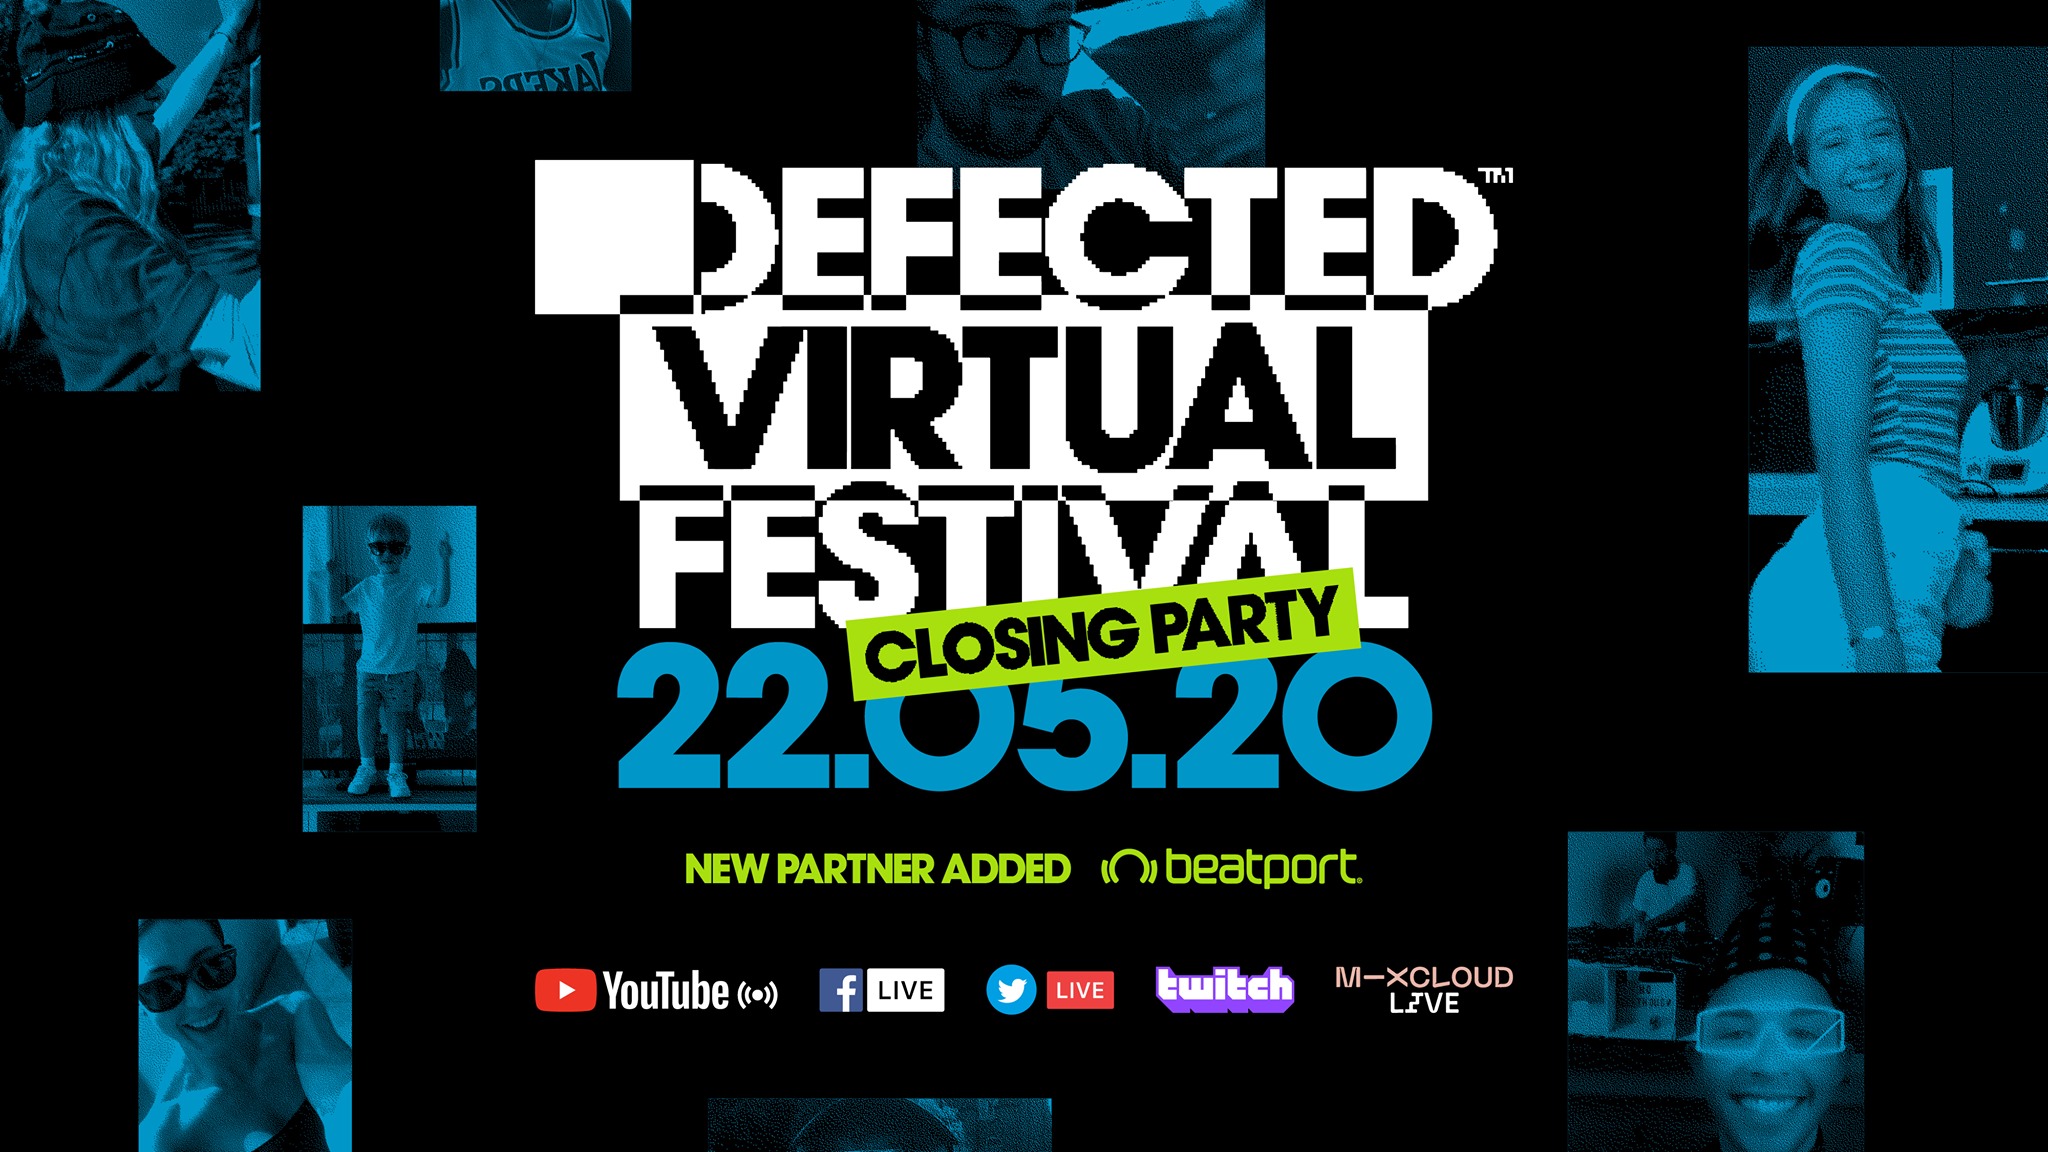 Defected Virtual Festival Closing Party